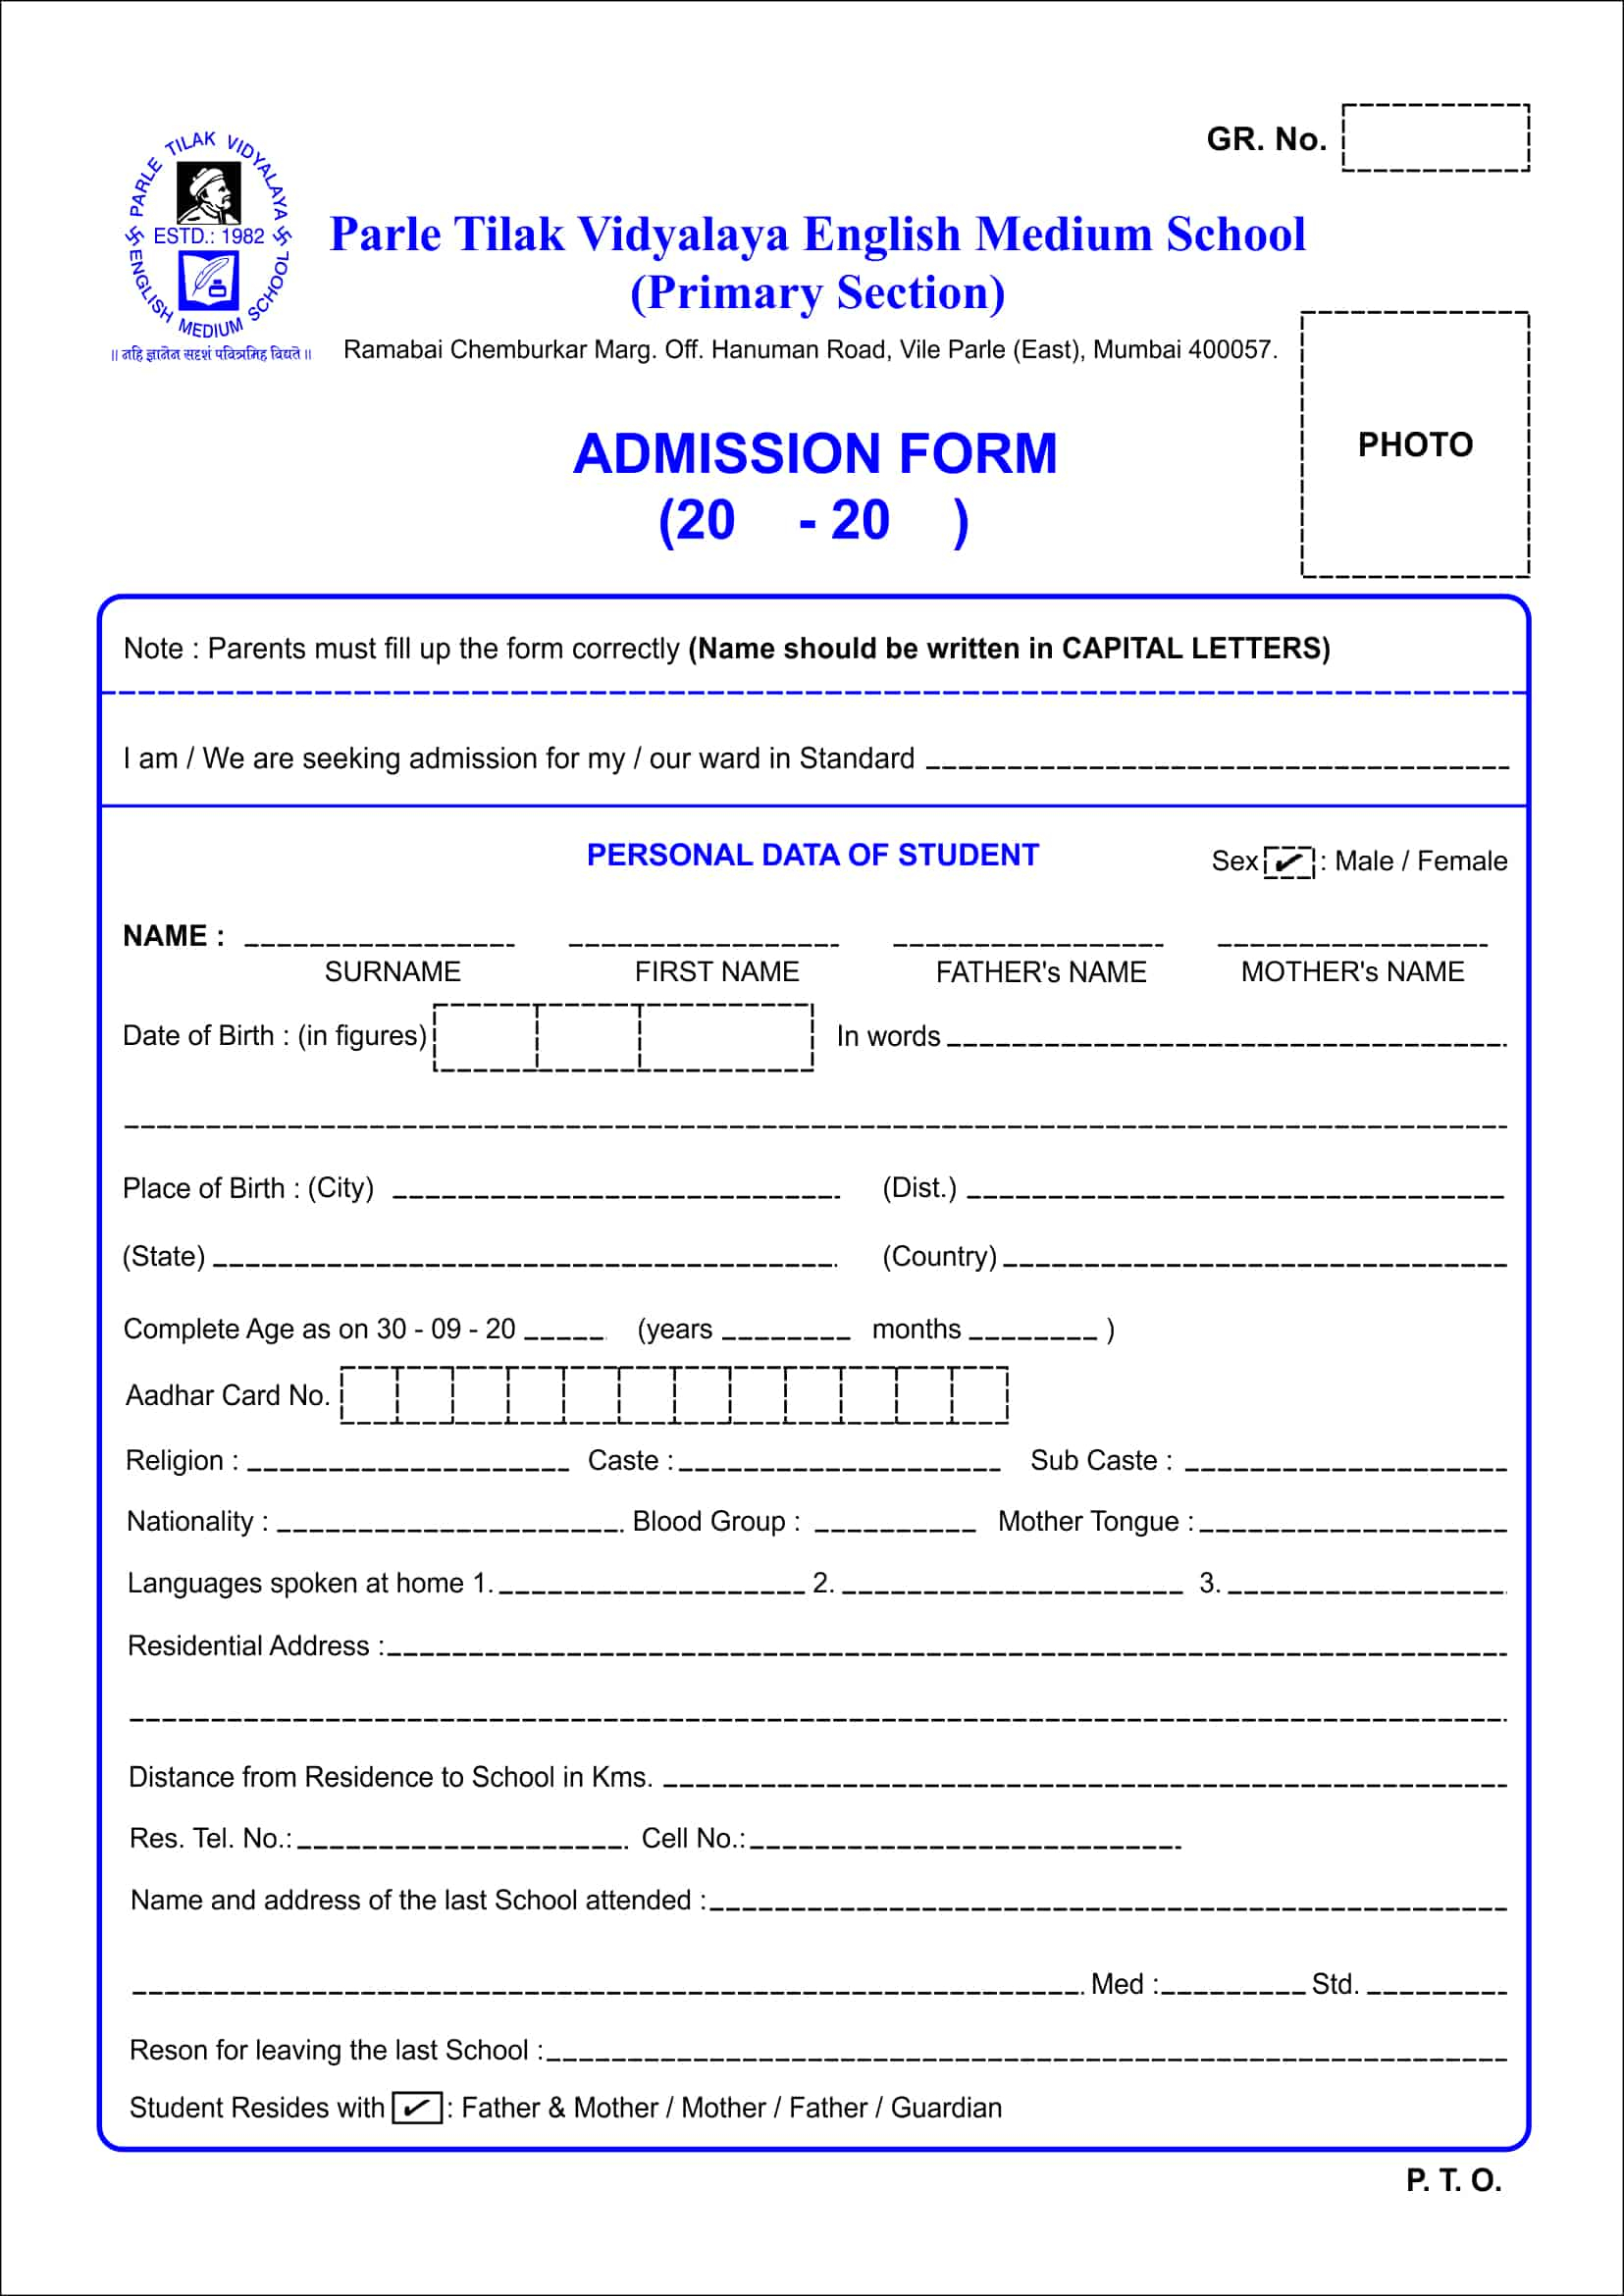 Admission Form PTVEM Secondary School